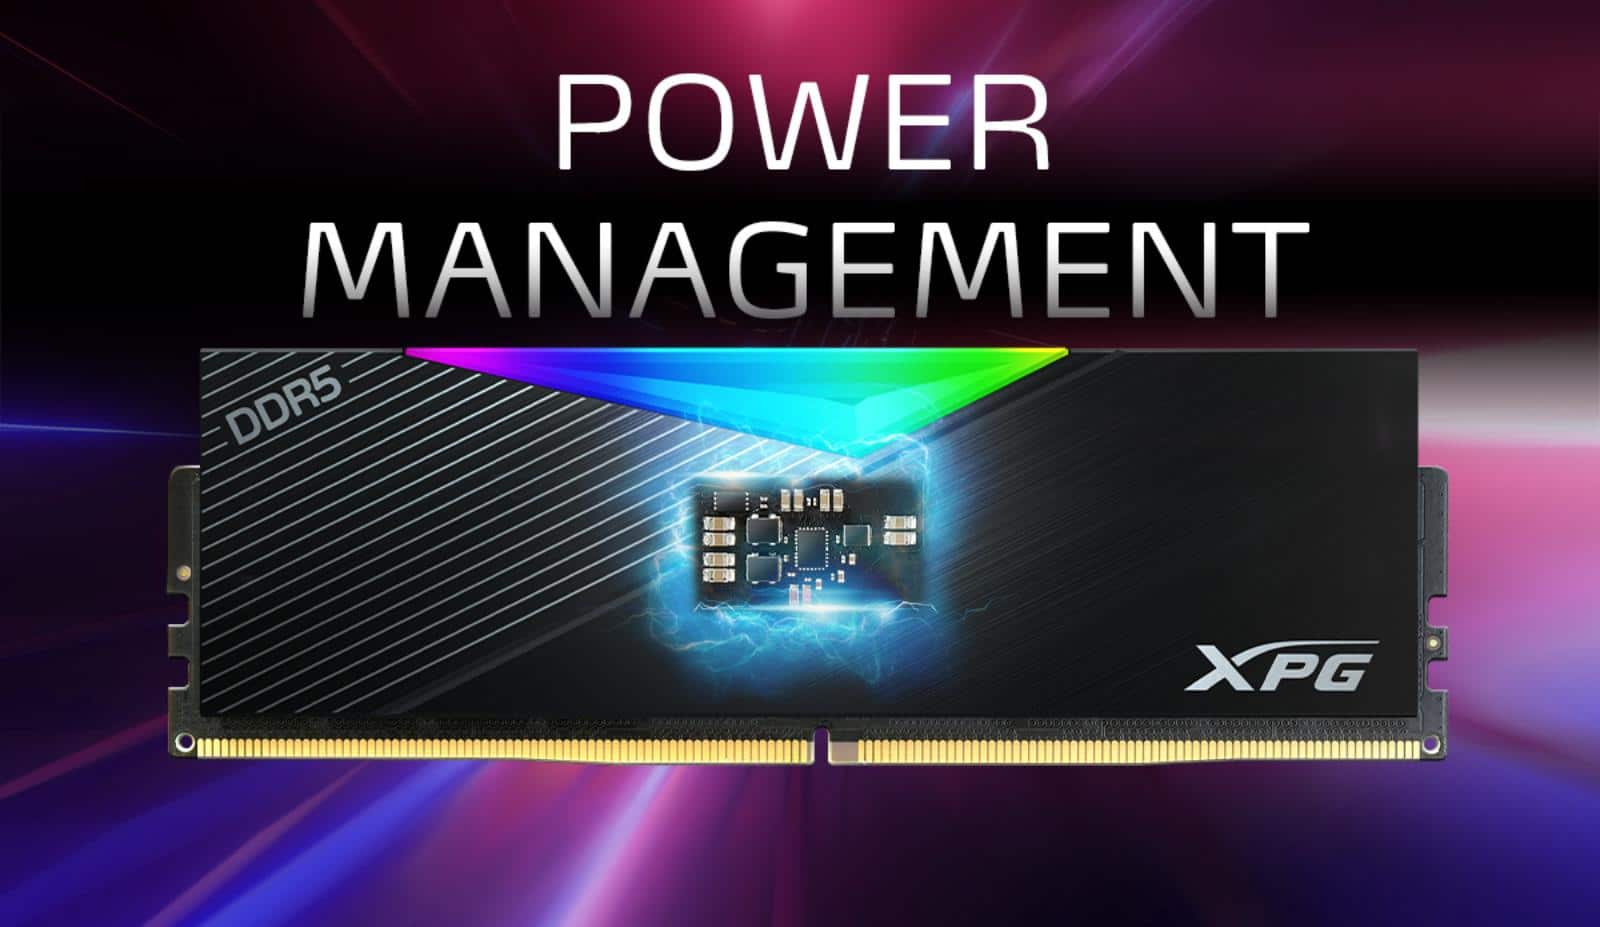 XPG Lancer DDR5 is ADATA's first gaming DDR5